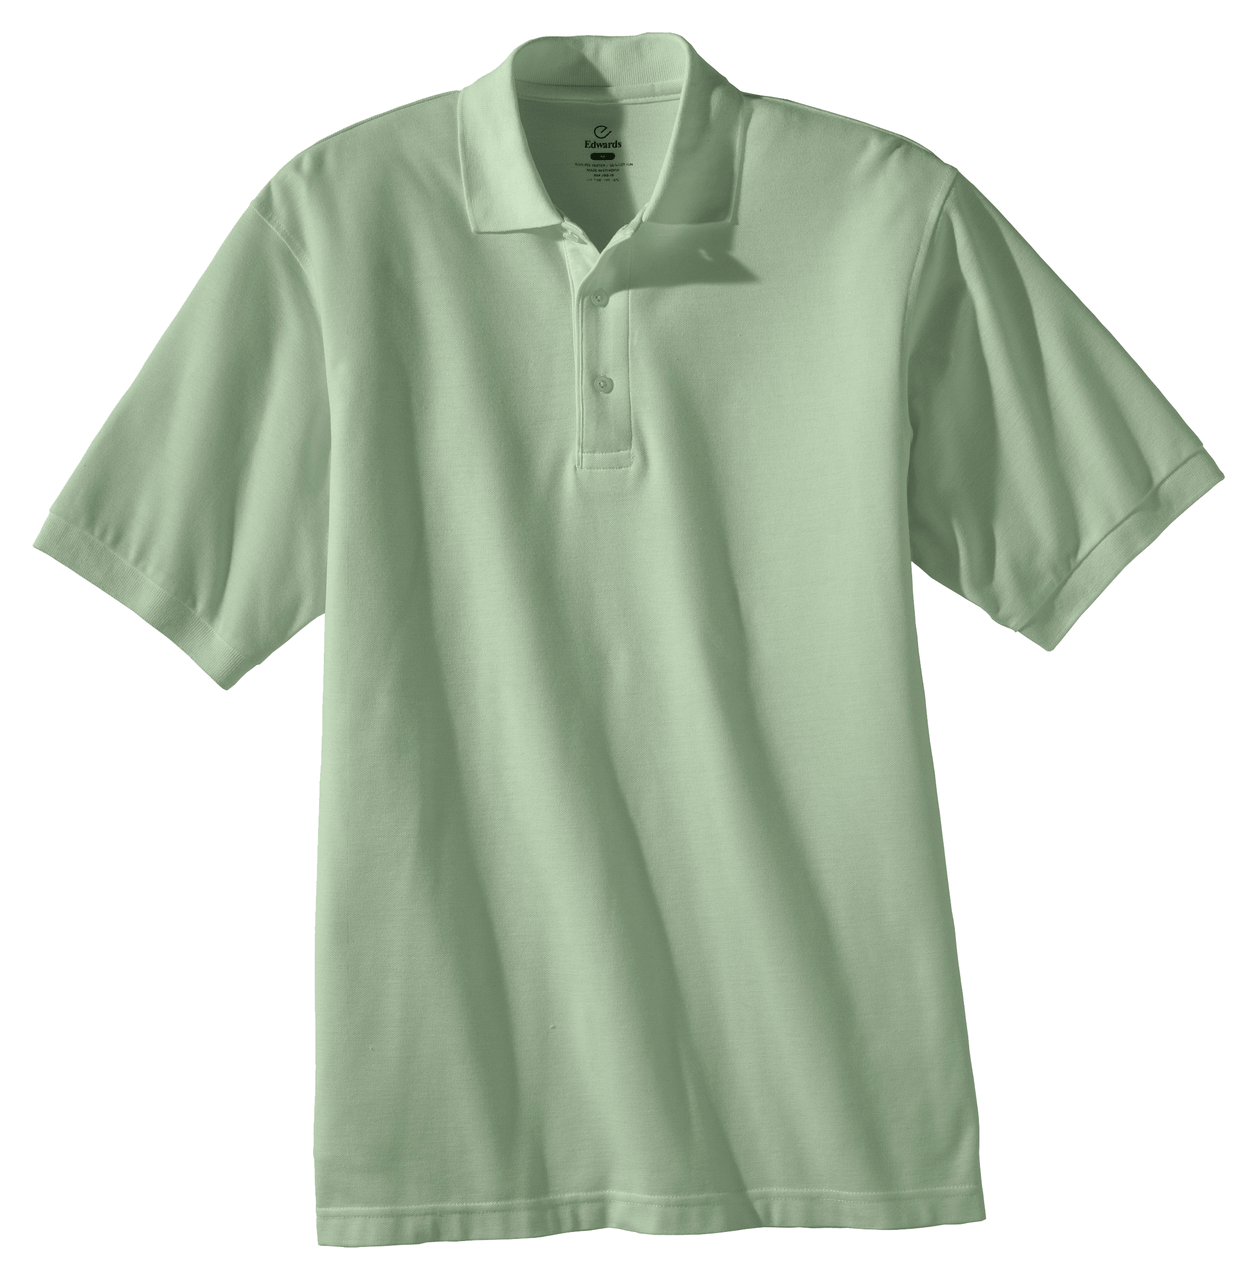 Men's Soft Touch Pique Polo Shirt